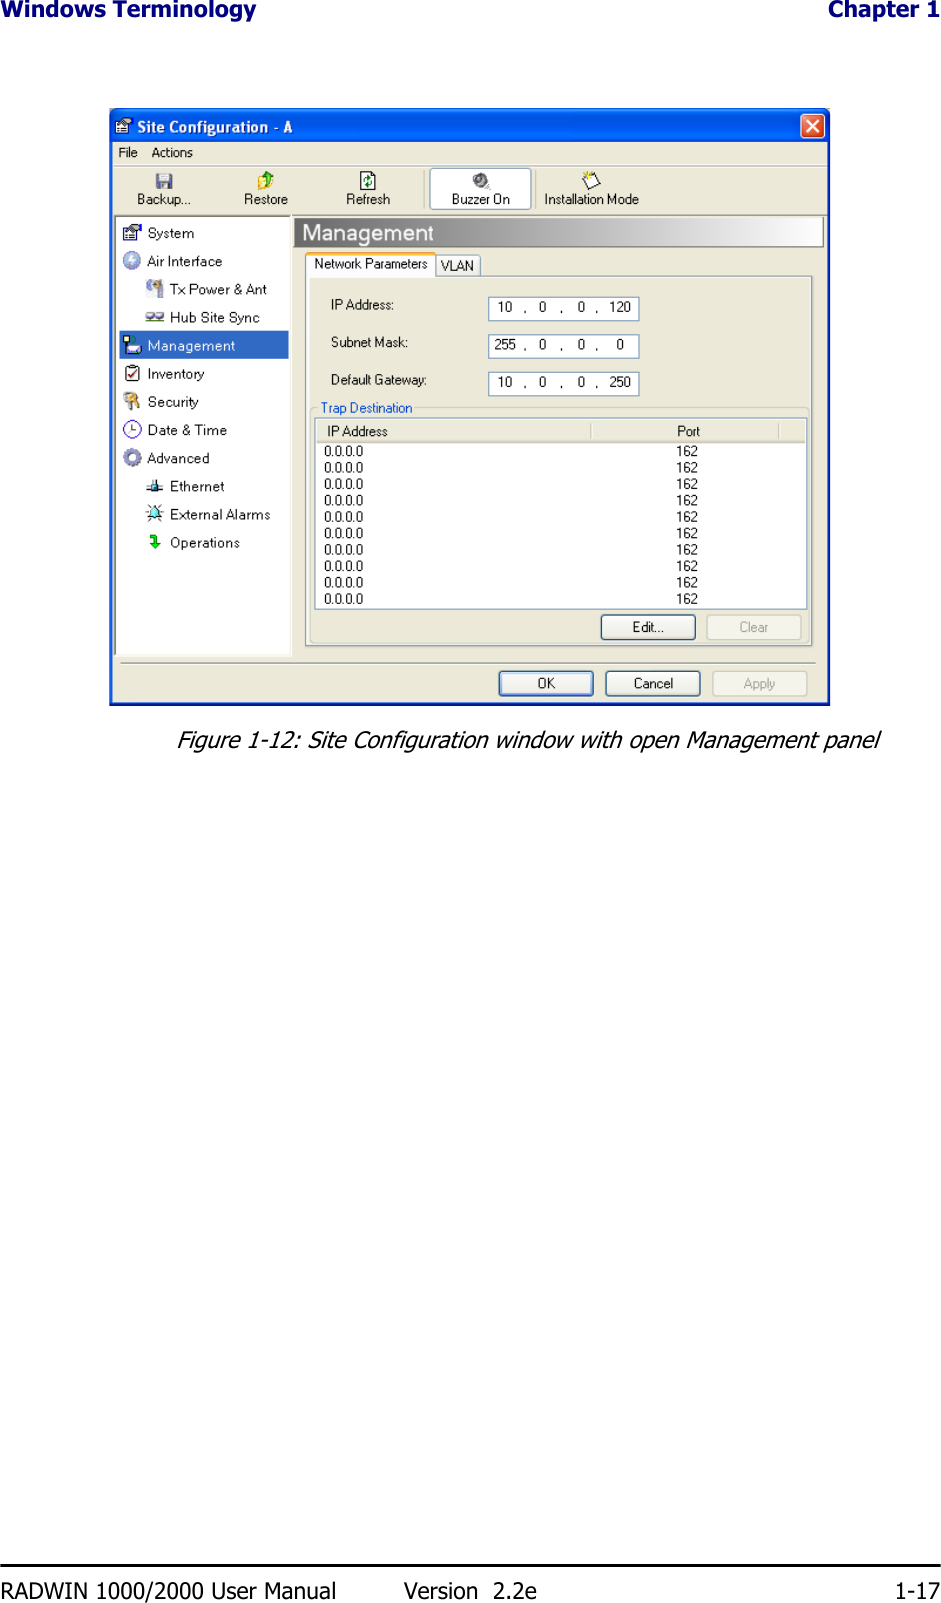 Windows Terminology  Chapter 1RADWIN 1000/2000 User Manual Version  2.2e 1-17Figure 1-12: Site Configuration window with open Management panel